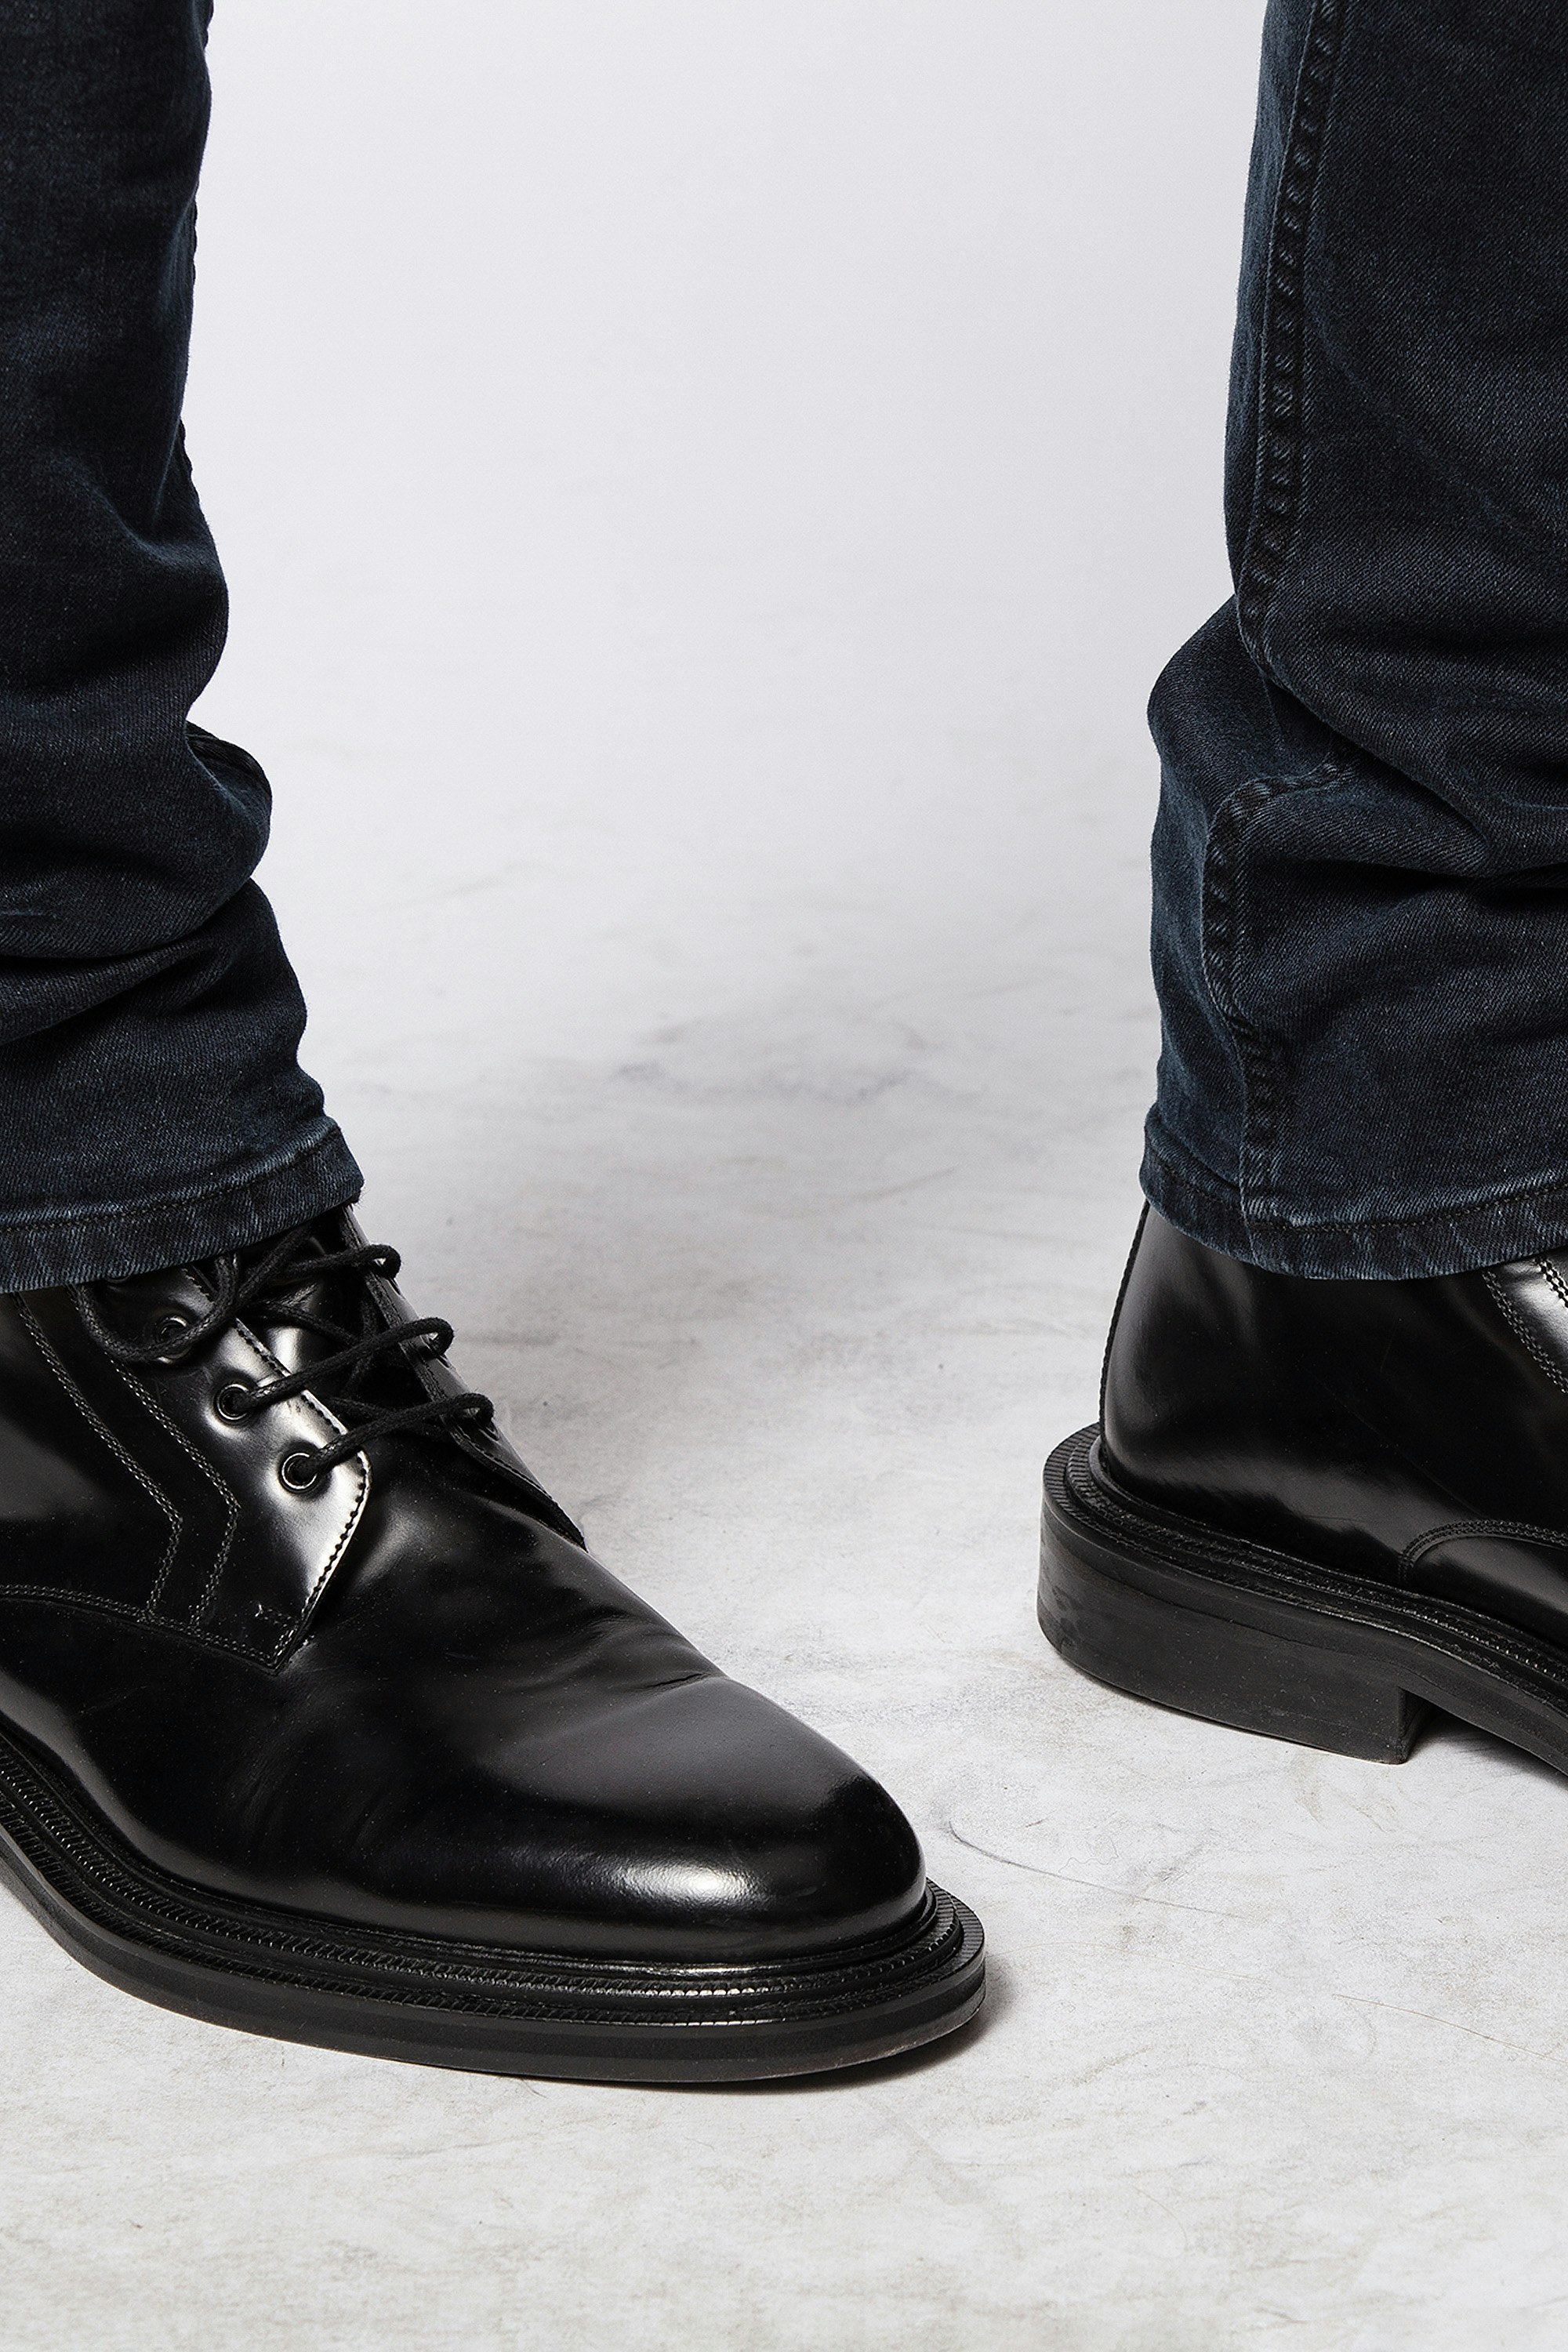 mens black ankle boots